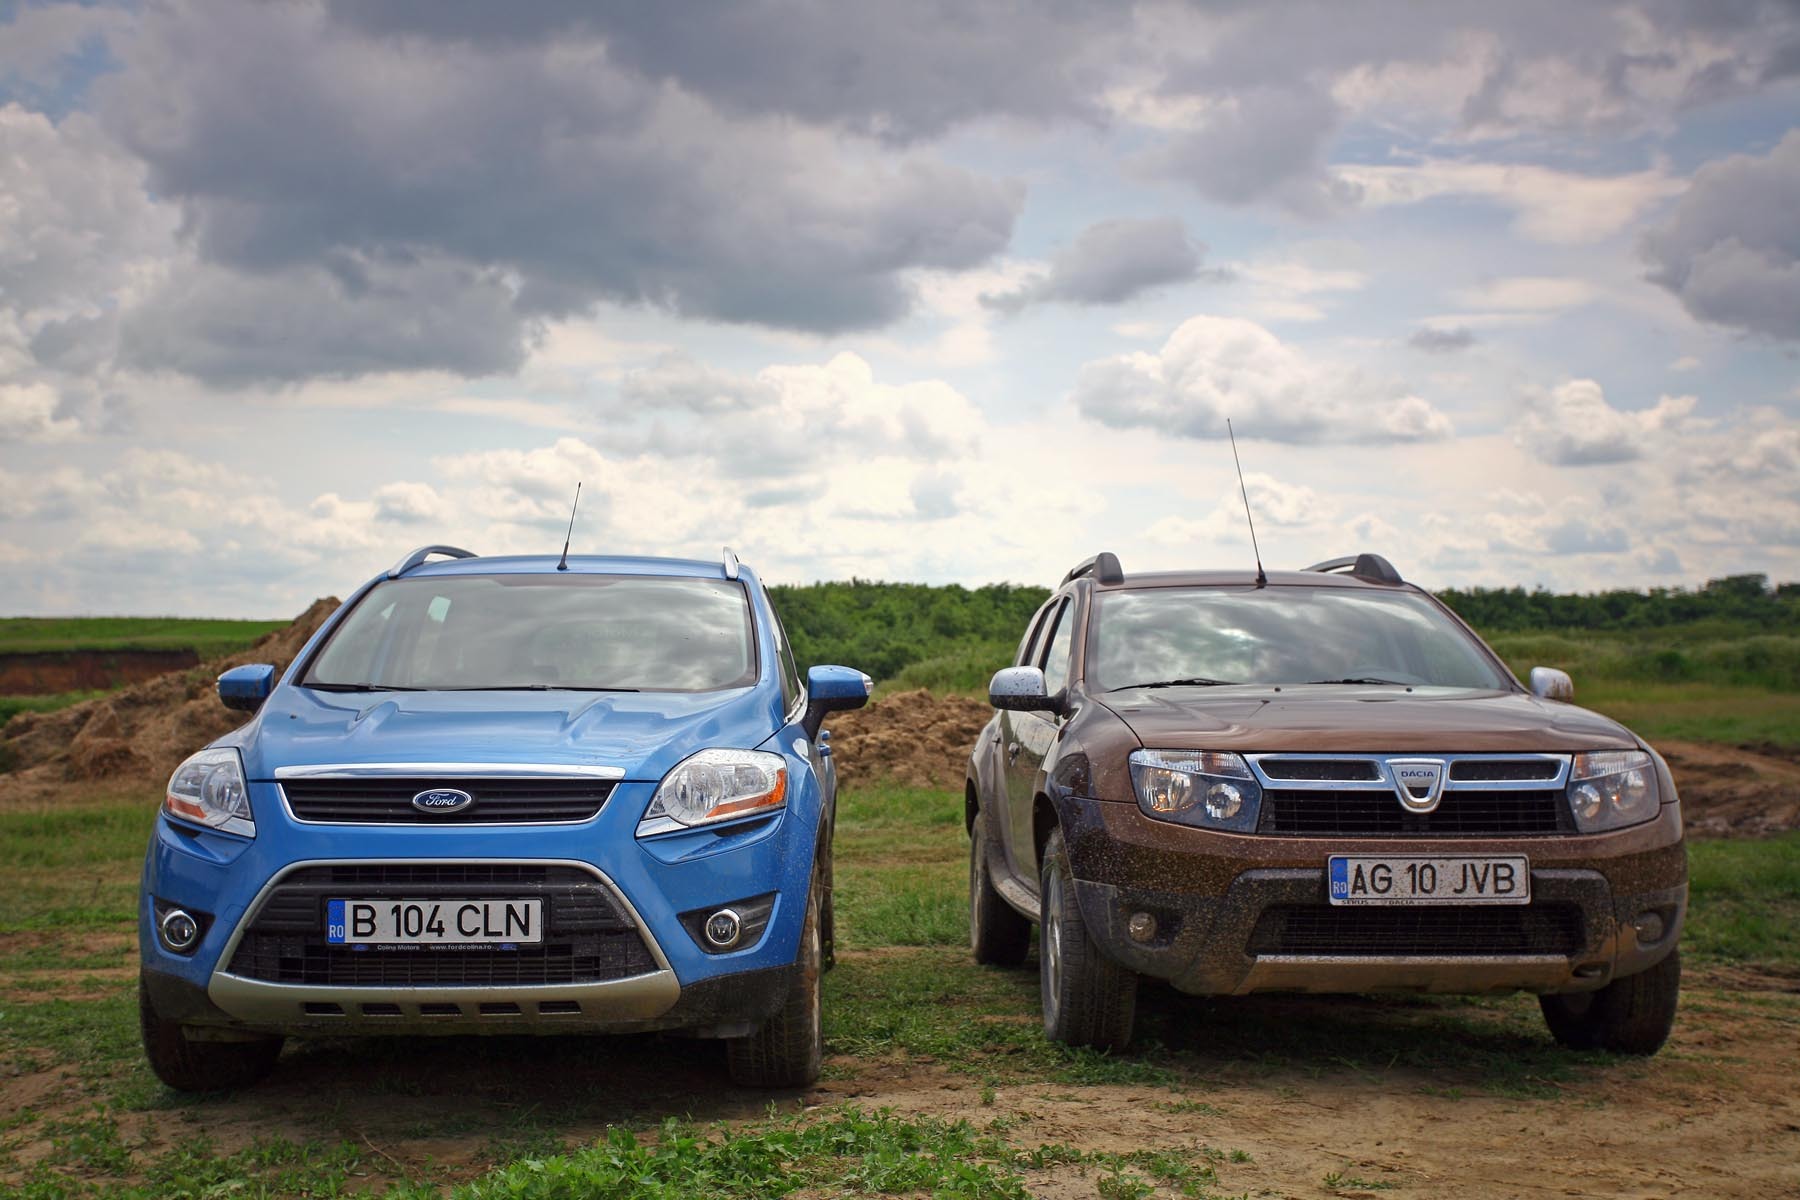 Diferenta intre Ford Kuga si Dacia Duster (modelele de test) se cifreaza la circa 7.000 euro